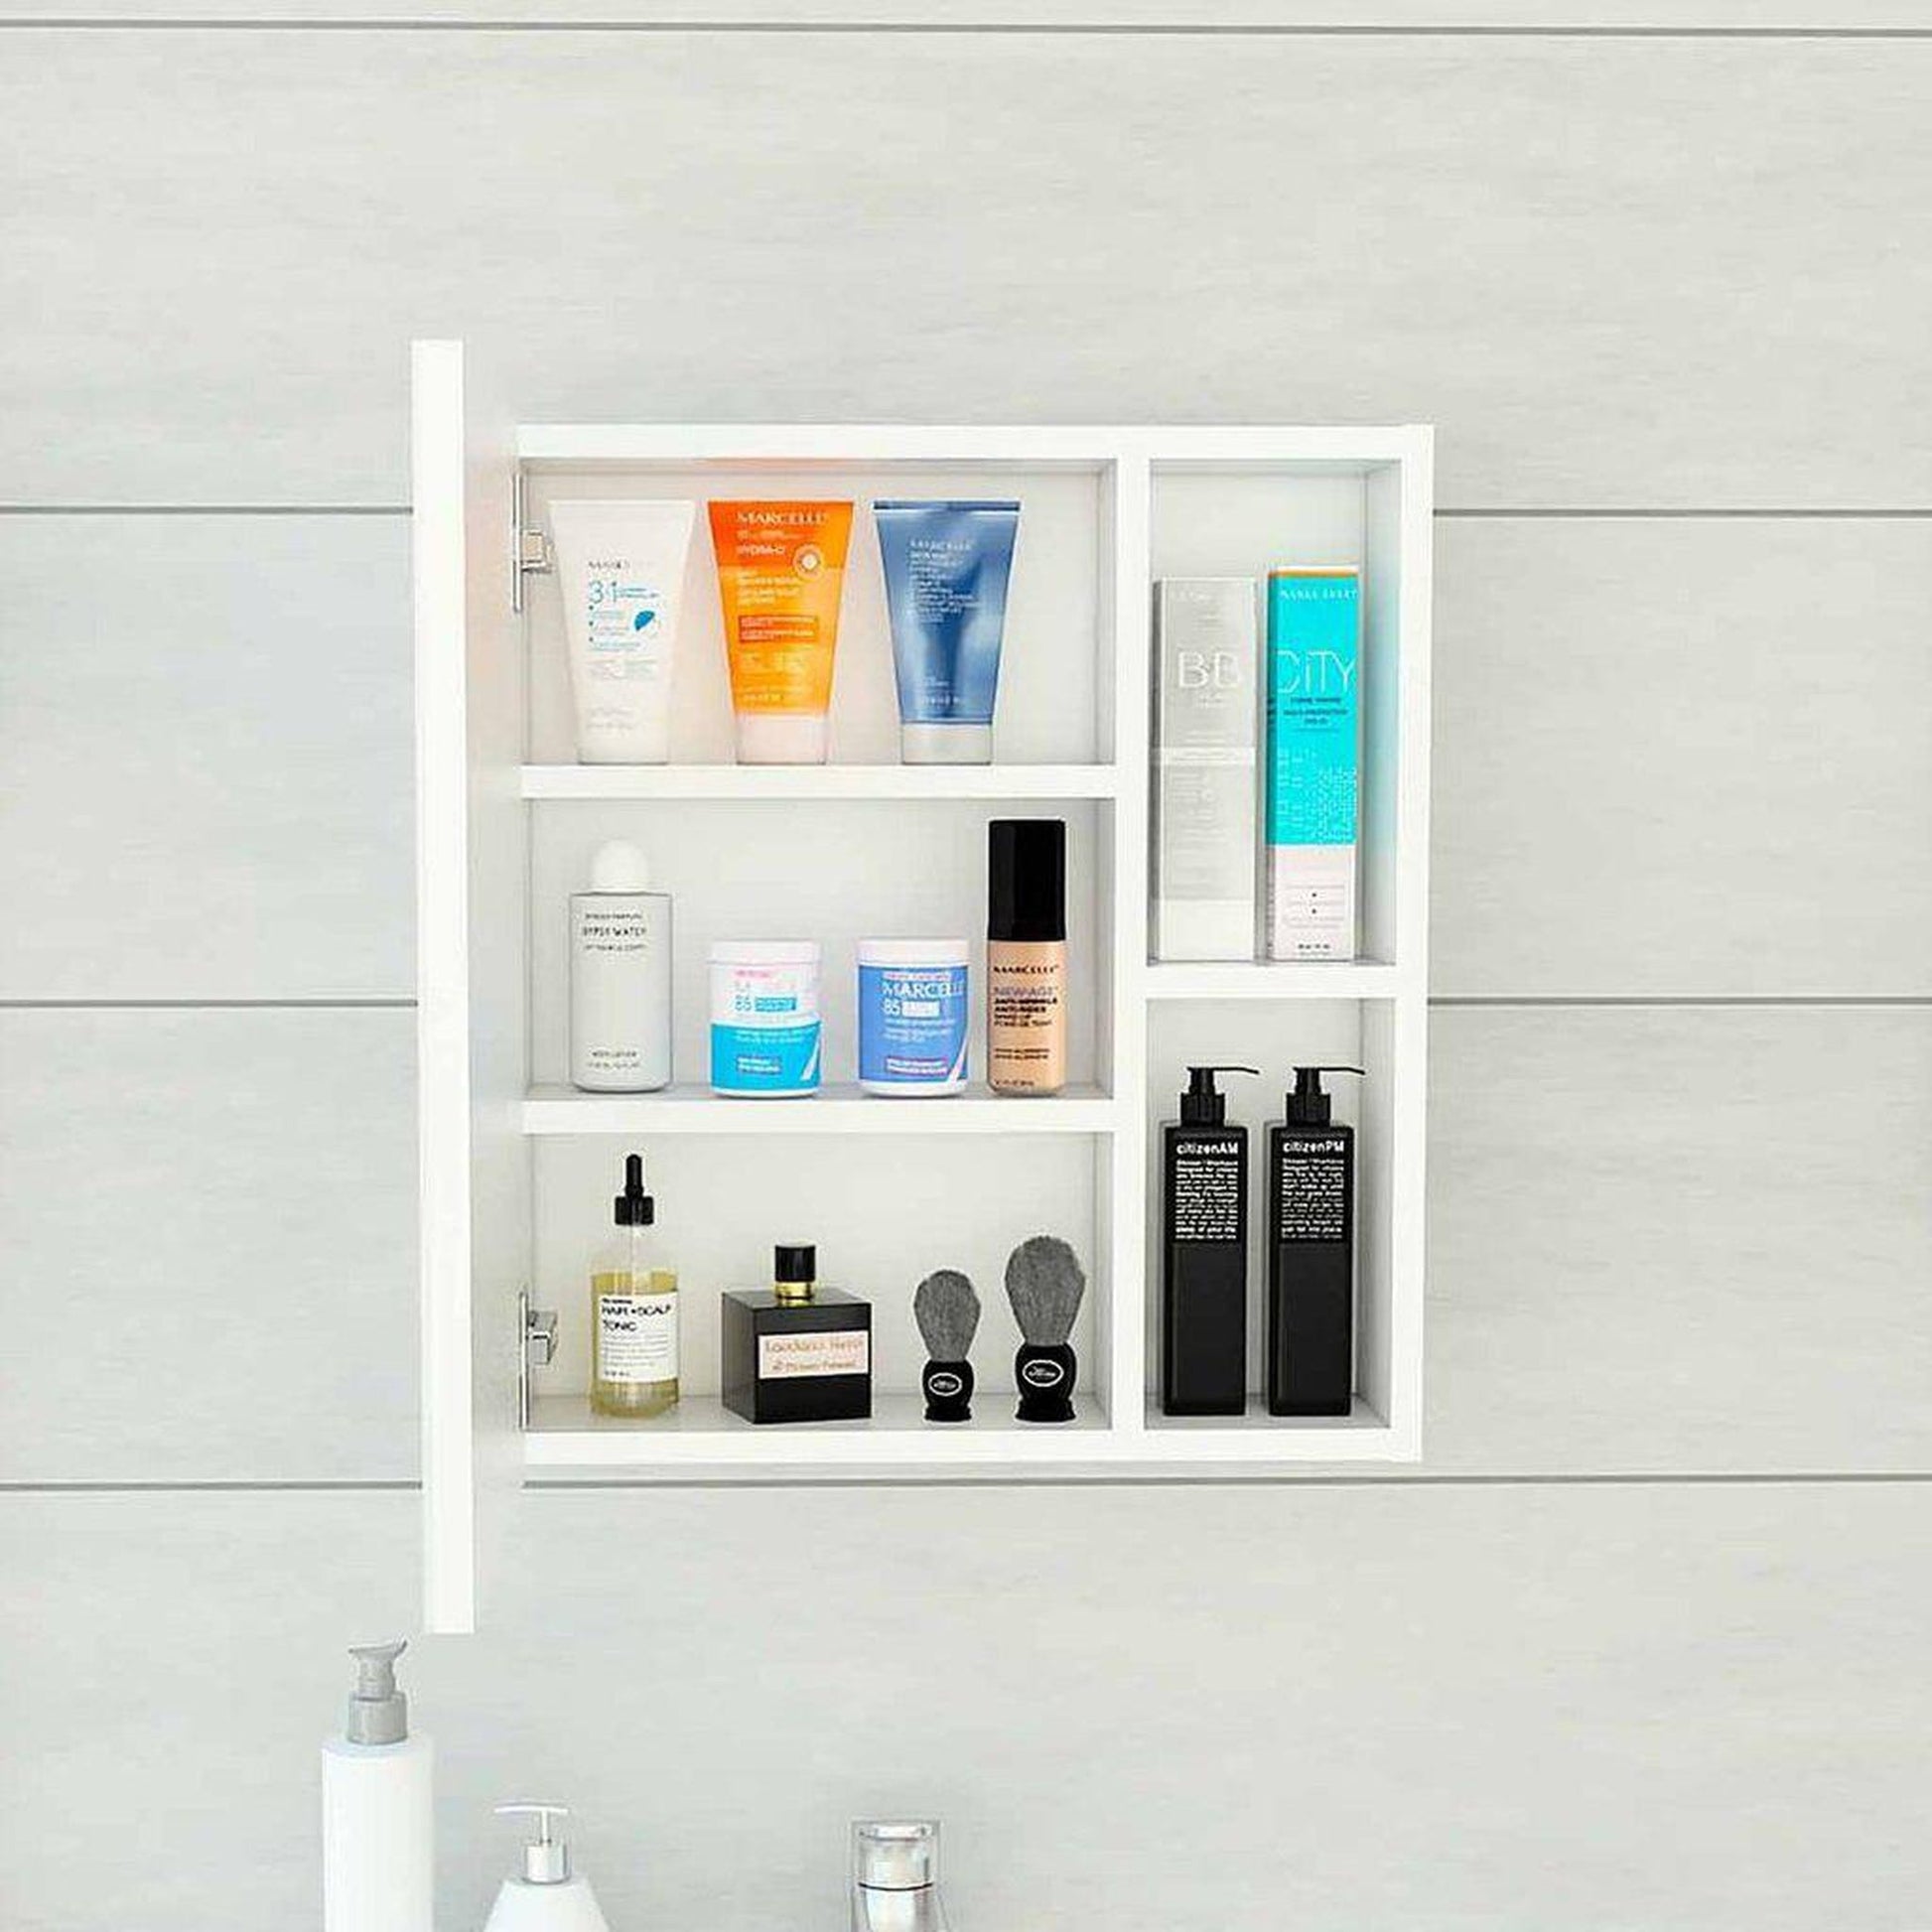 Tuhome Labelle Mirror Cabinet, White, for Bathroom